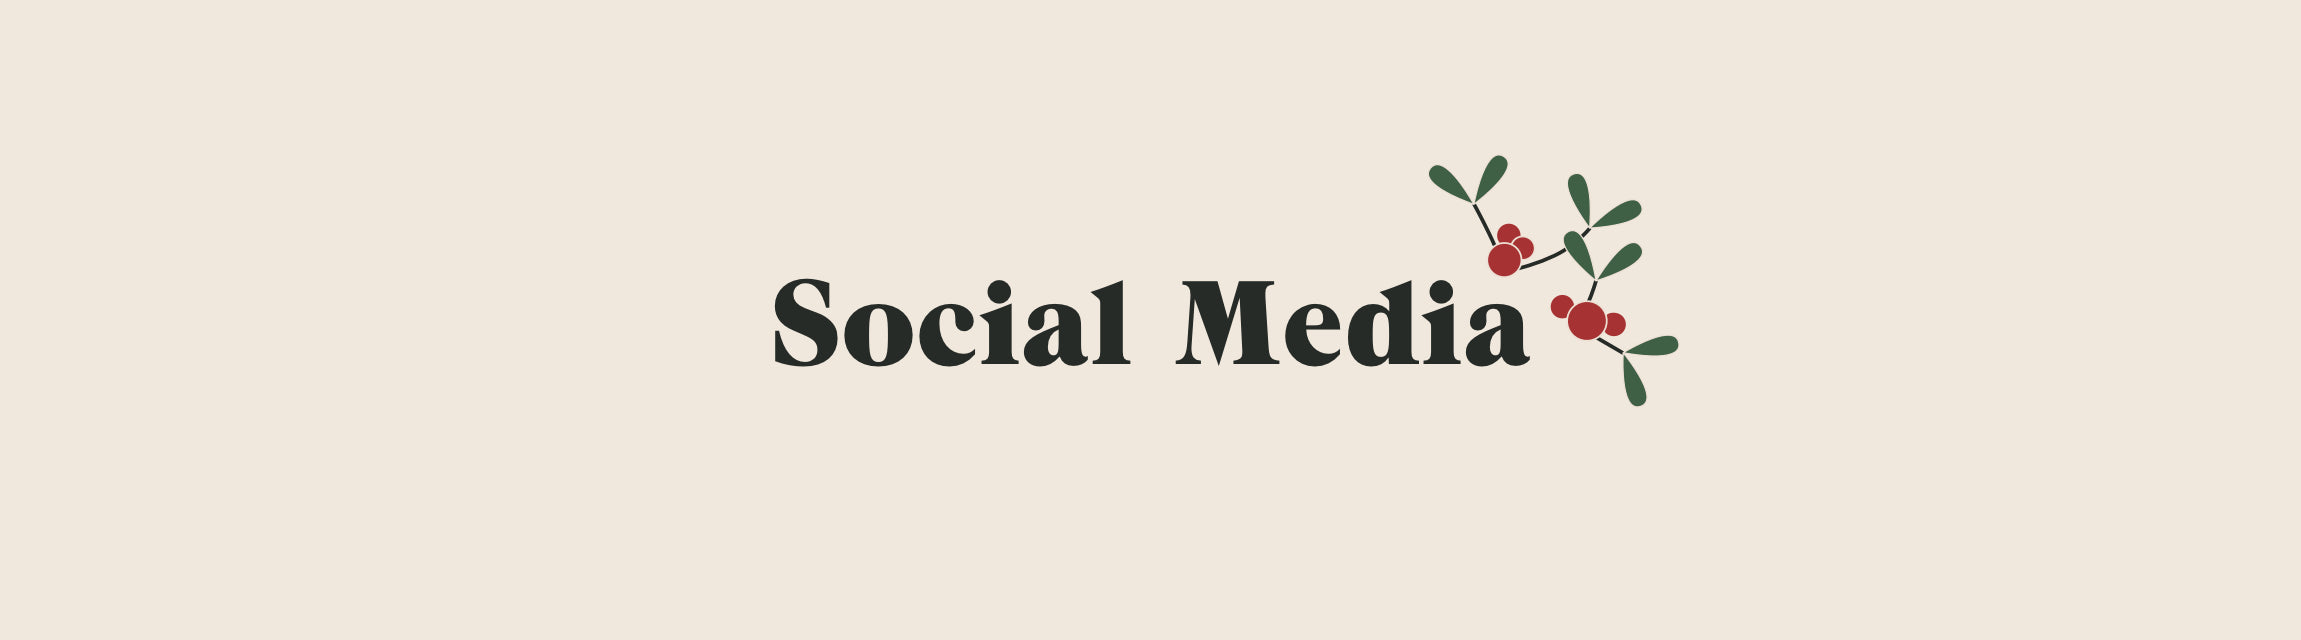 Social Media title with mistletoe icon